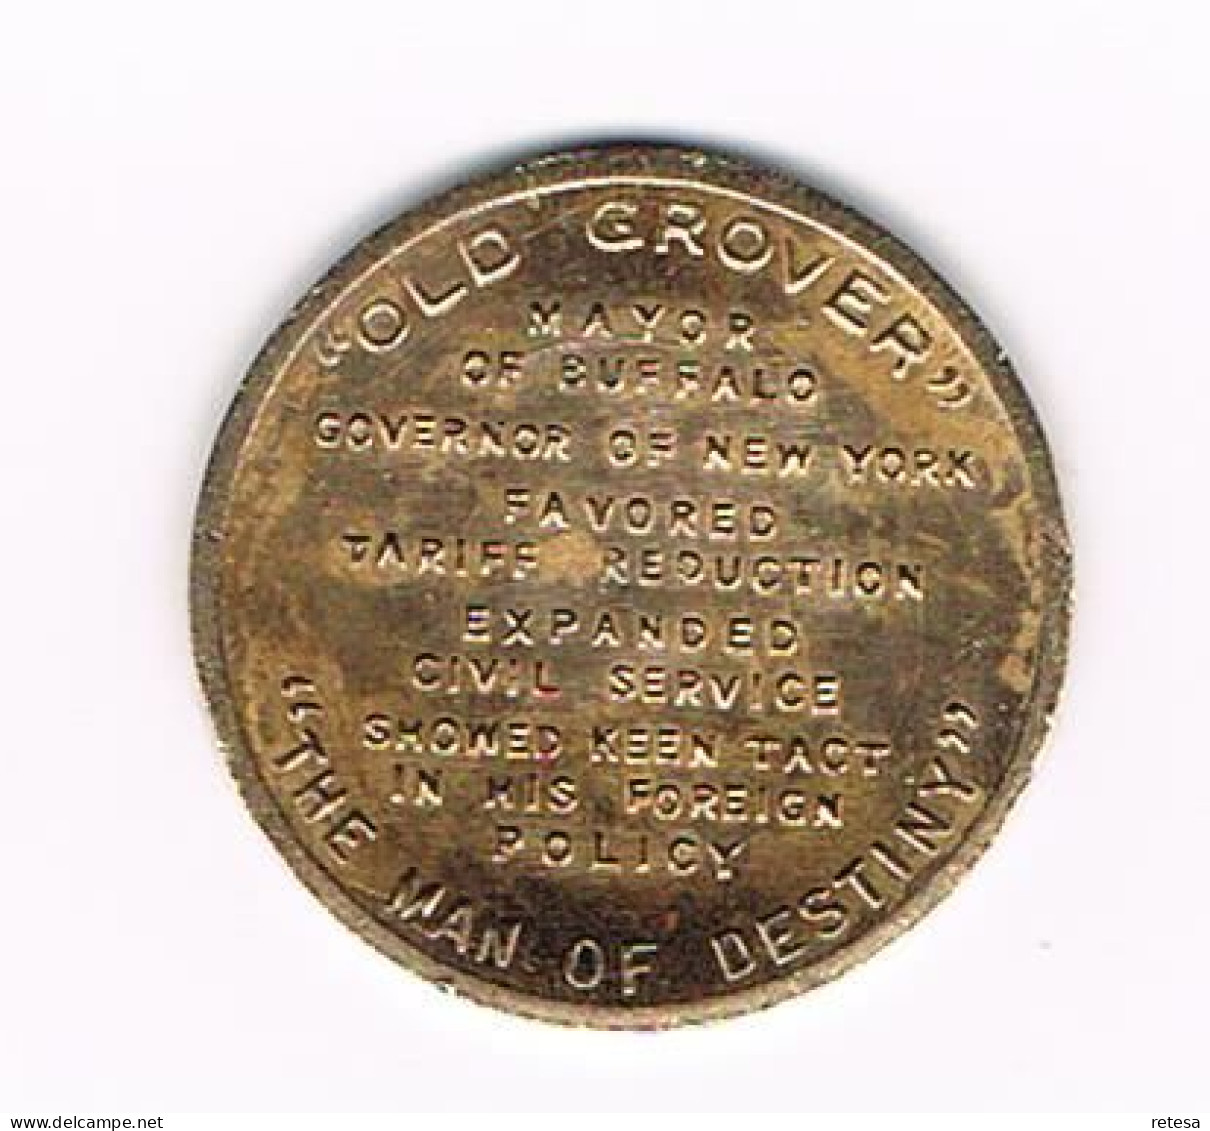 # PENNING  GROVER CLEVELAND 24 TH  PRESIDENT  U.S.A. - Pièces écrasées (Elongated Coins)